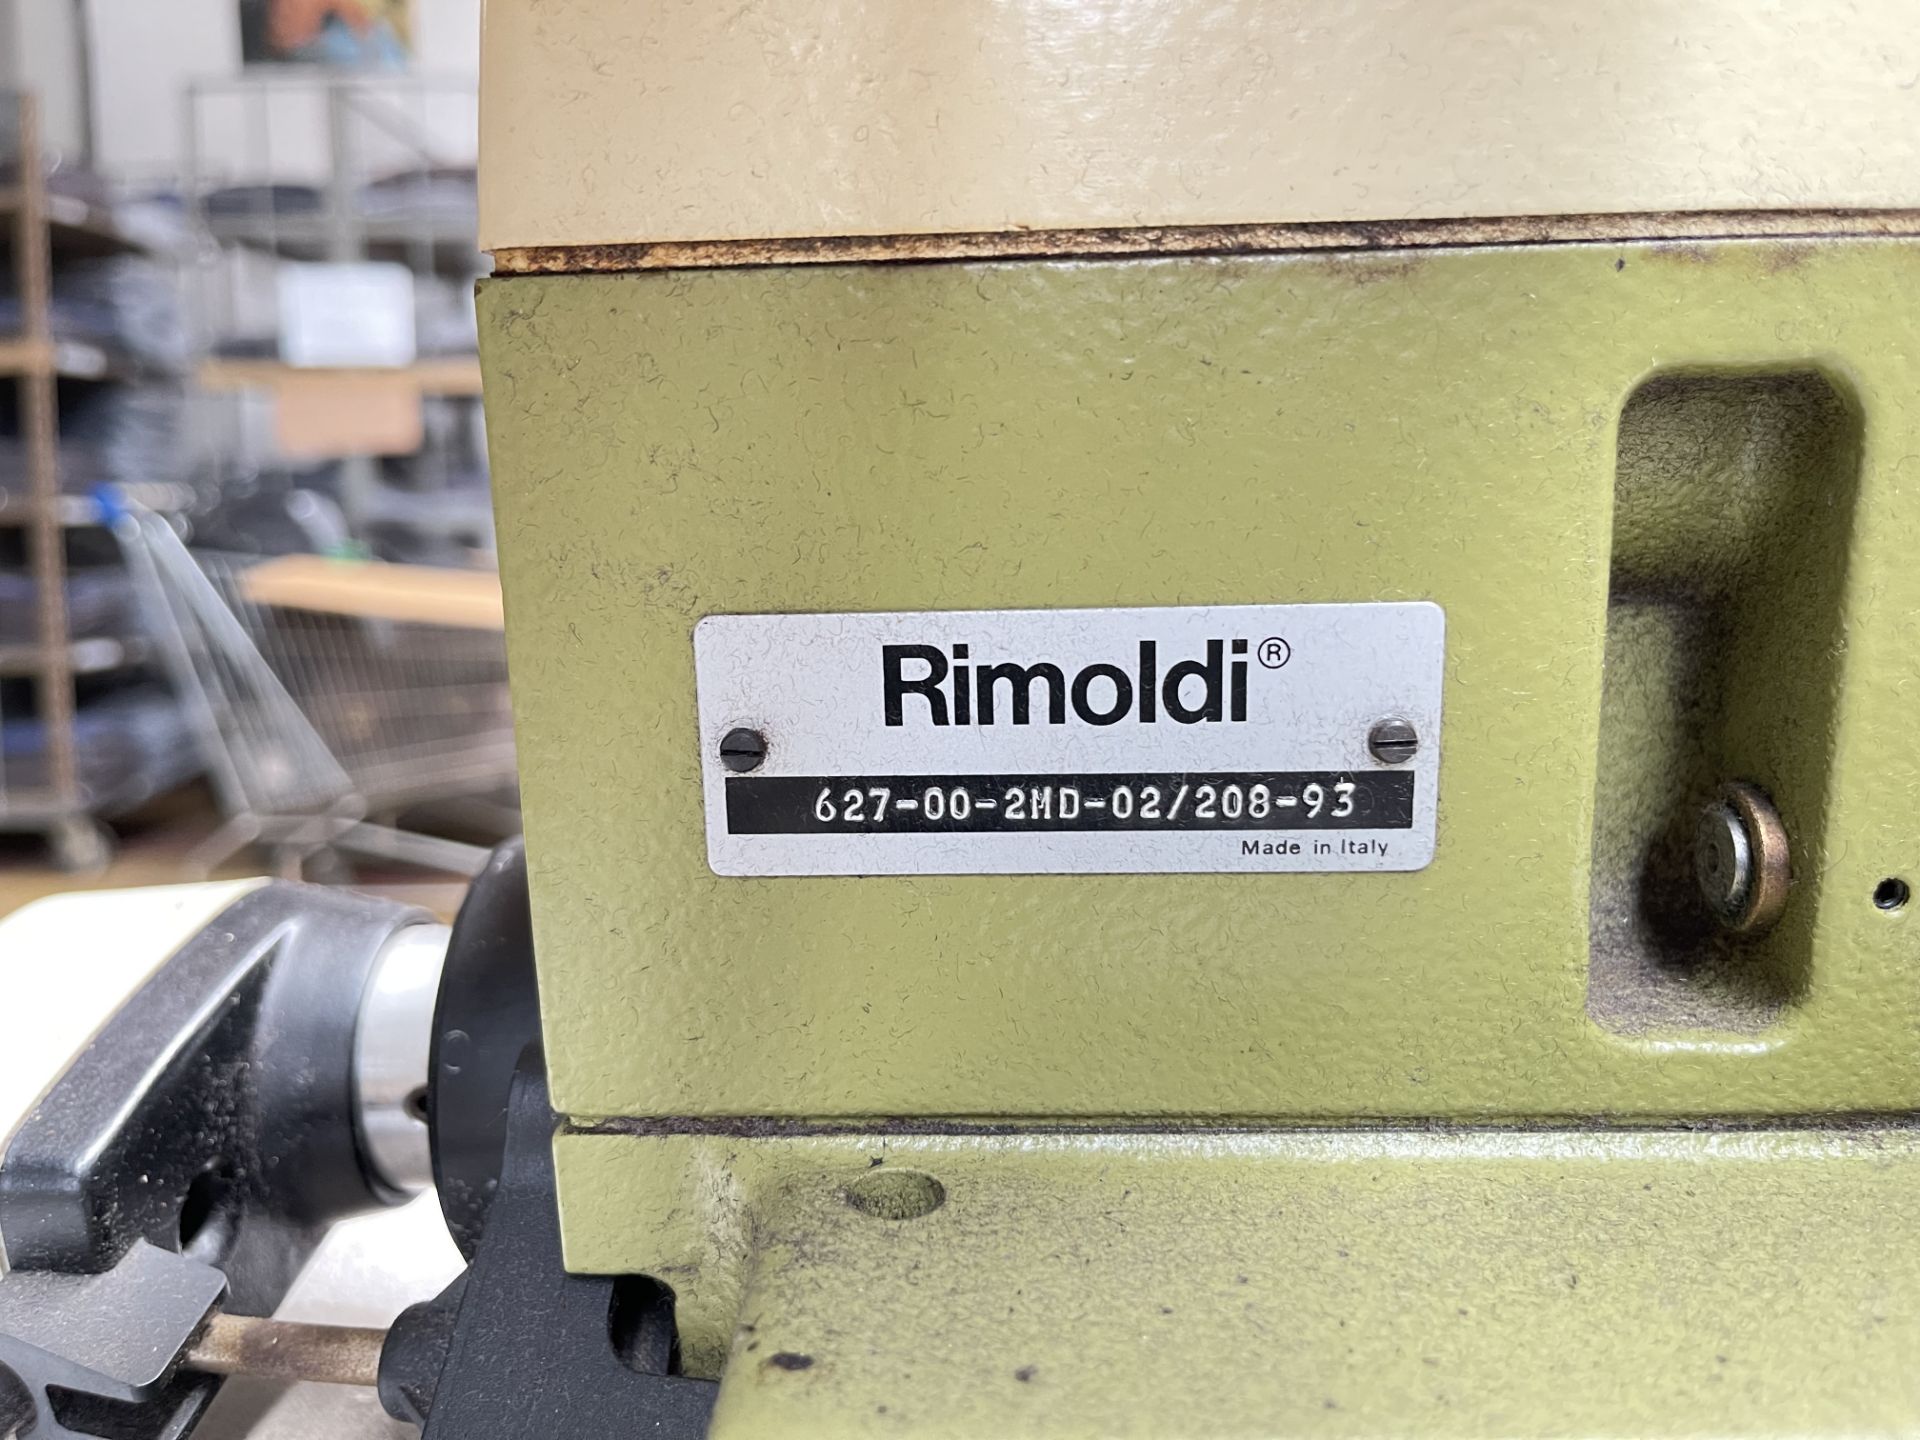 Rimoldi Orion 627-00-2MD-02\208-93 Overlocker Sewing machine. S/No 1016798 - Image 8 of 10